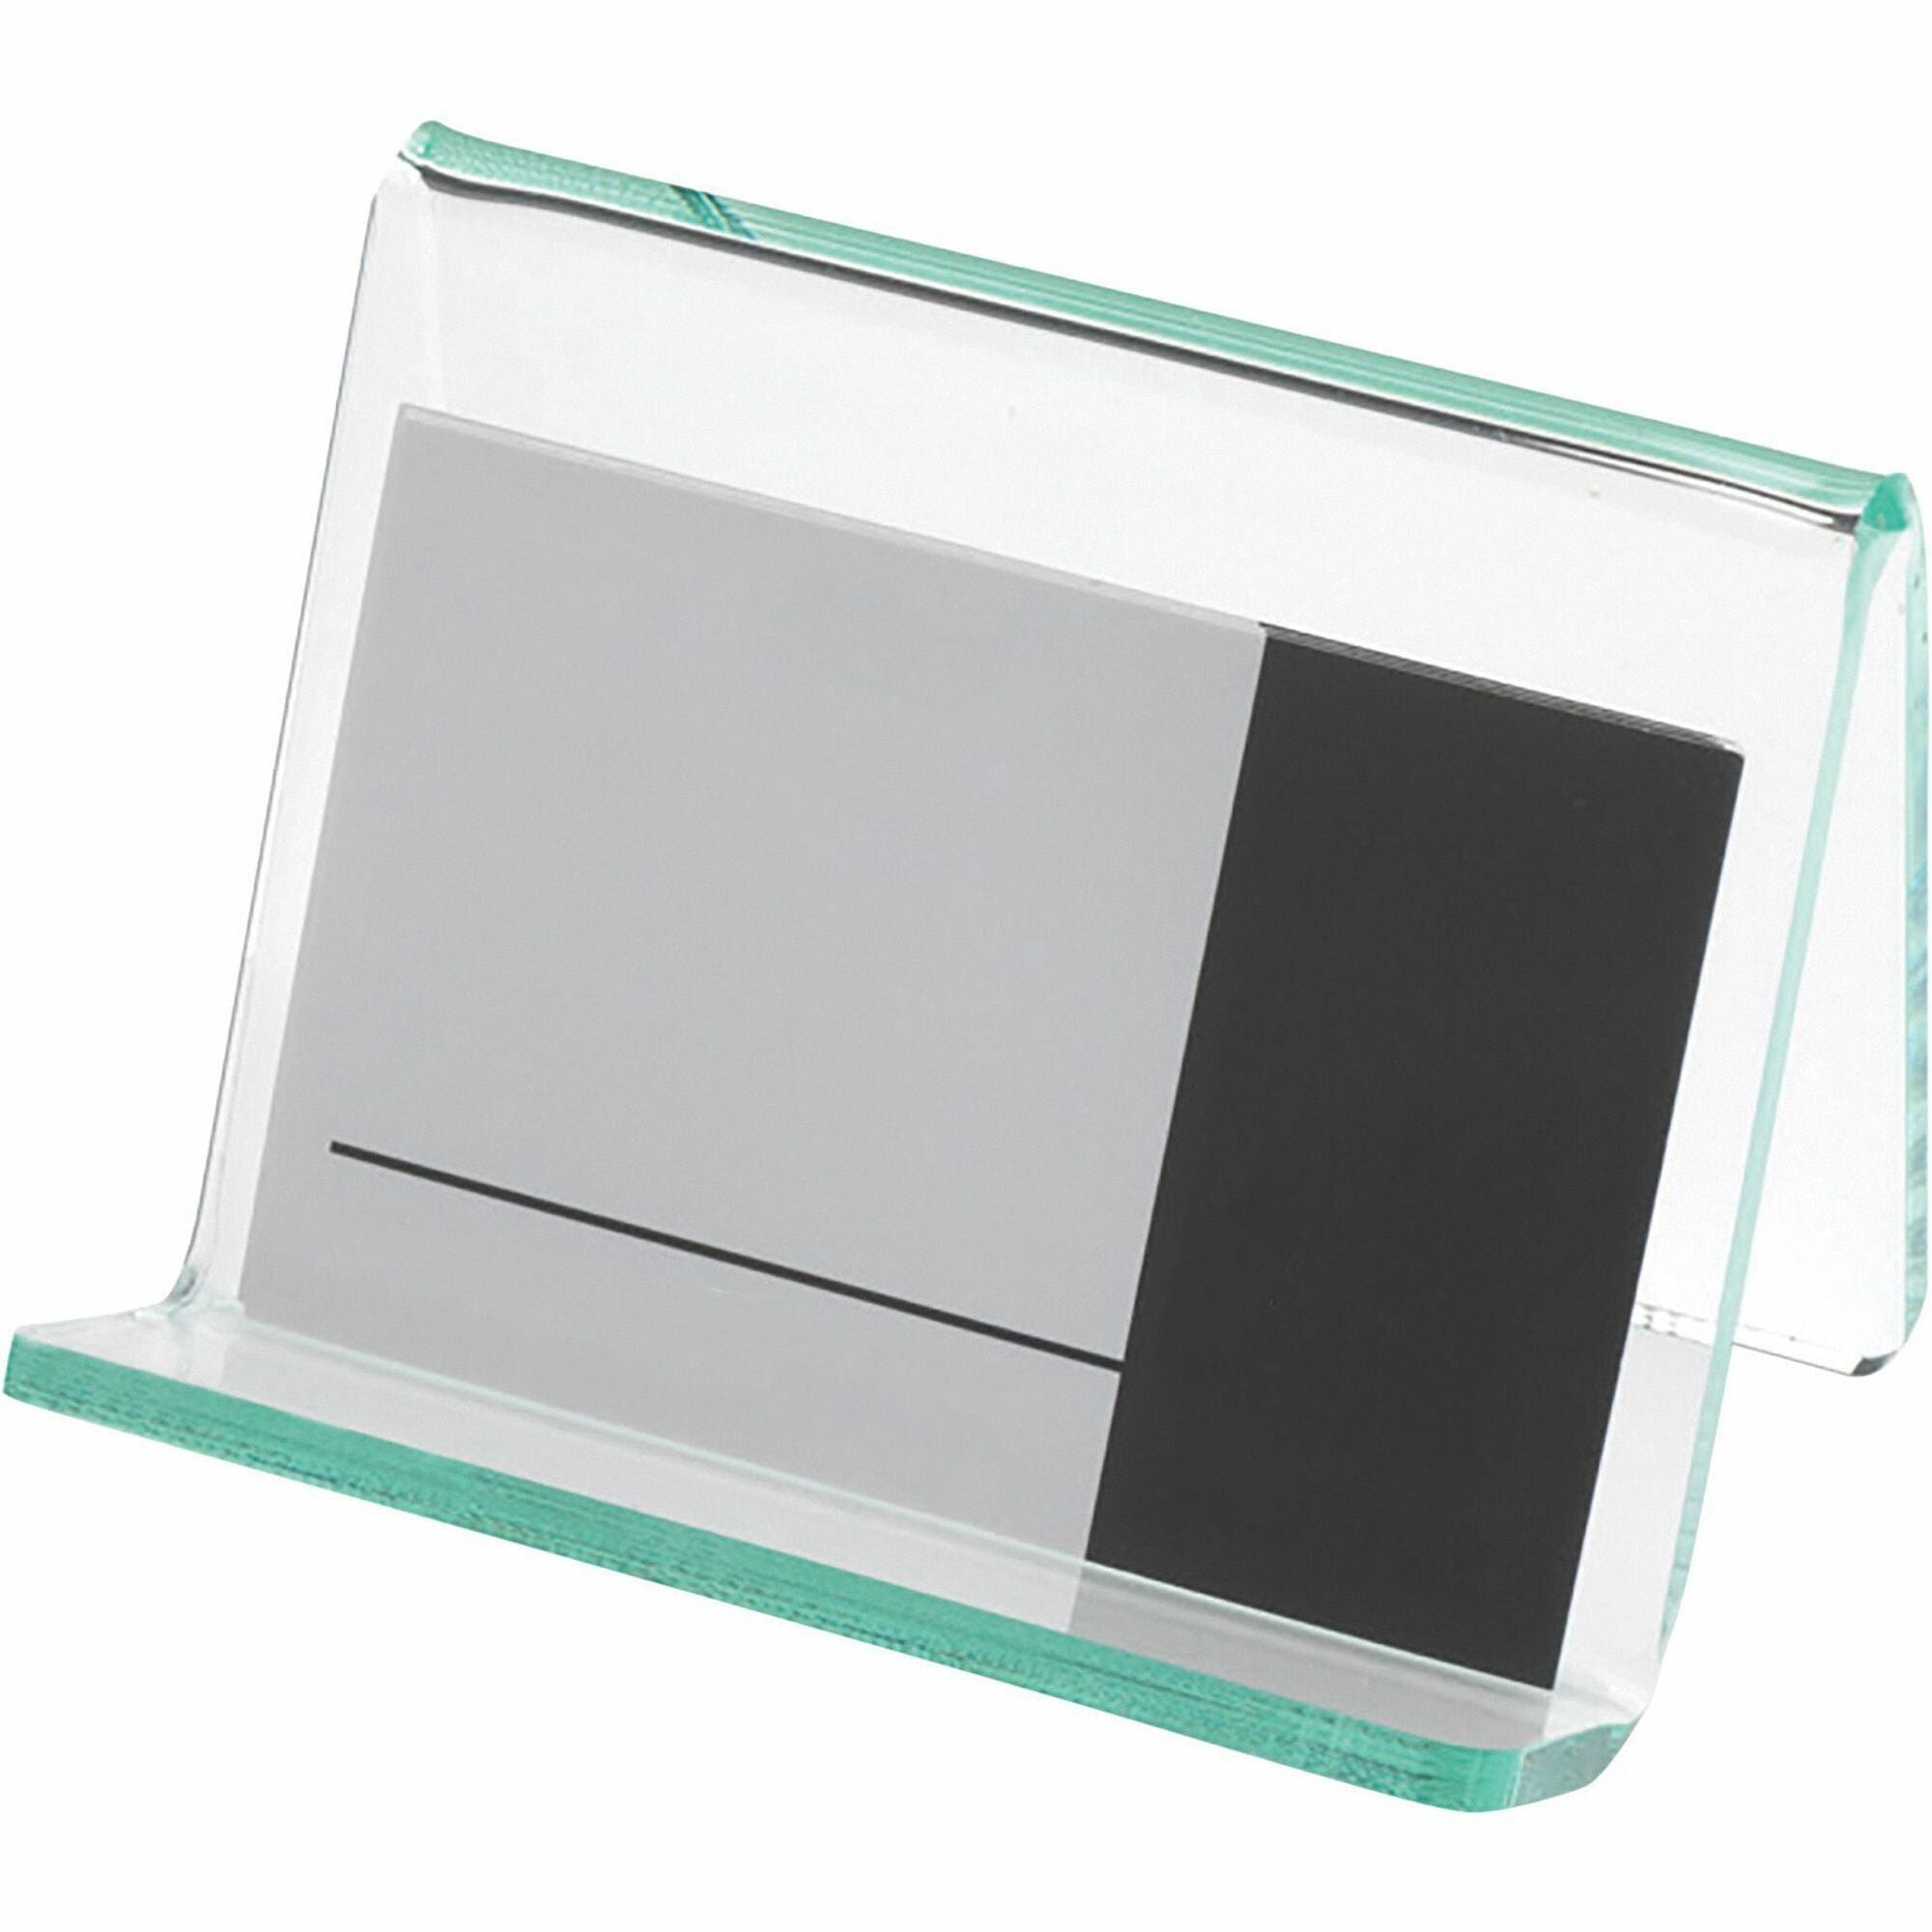 Lorell Business Card Holder - Acrylic - 1 Each - Green, Transparent - 